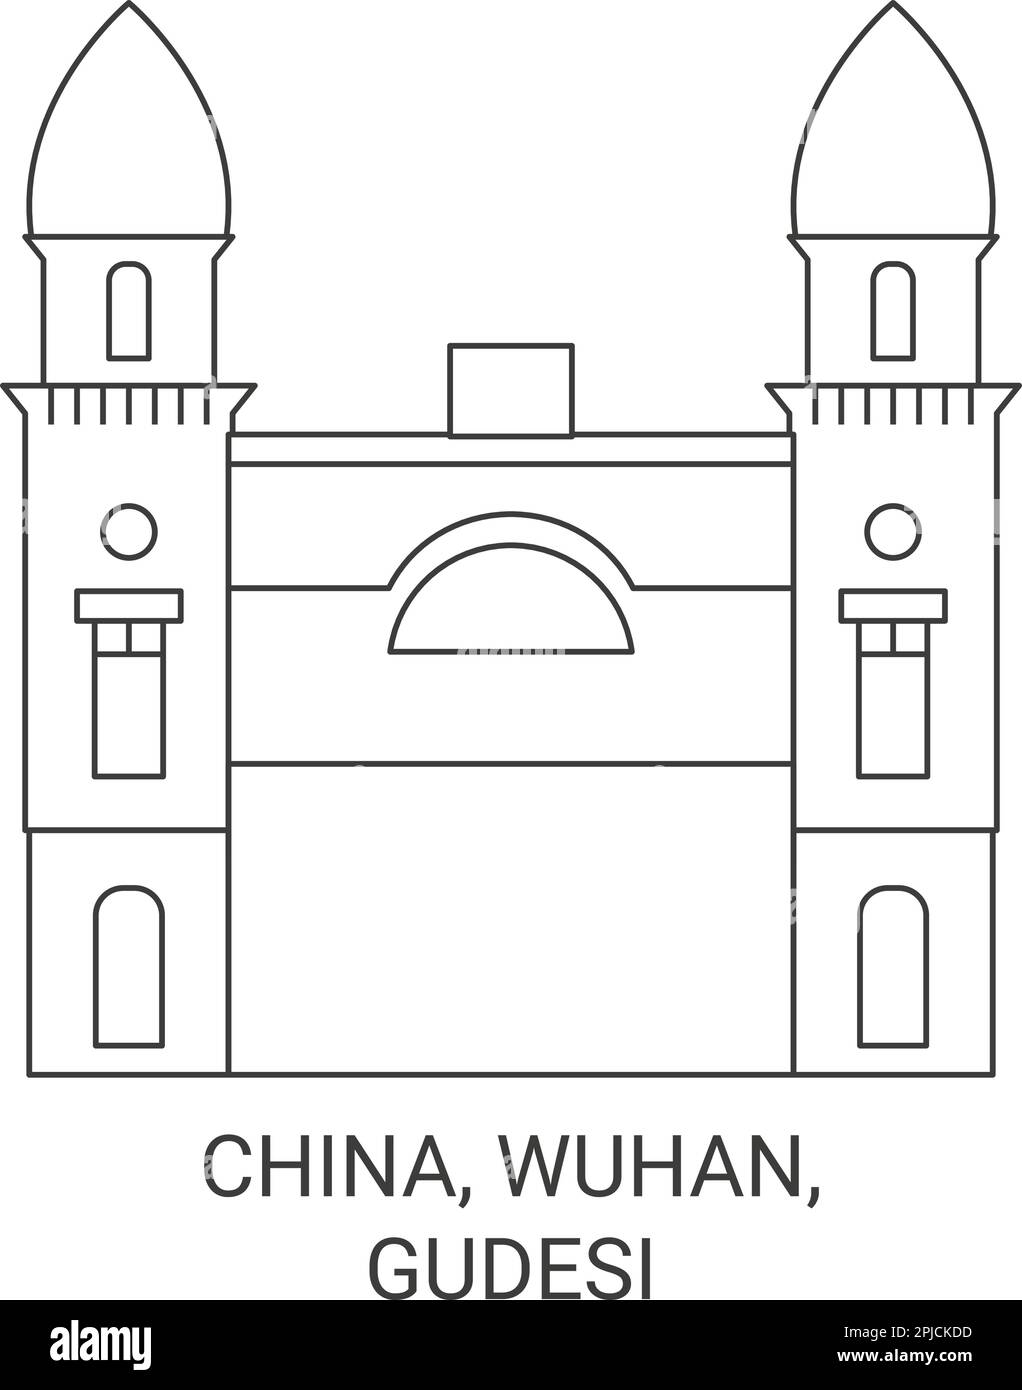 China, Wuhan, Gudesi travel landmark vector illustration Stock Vector ...